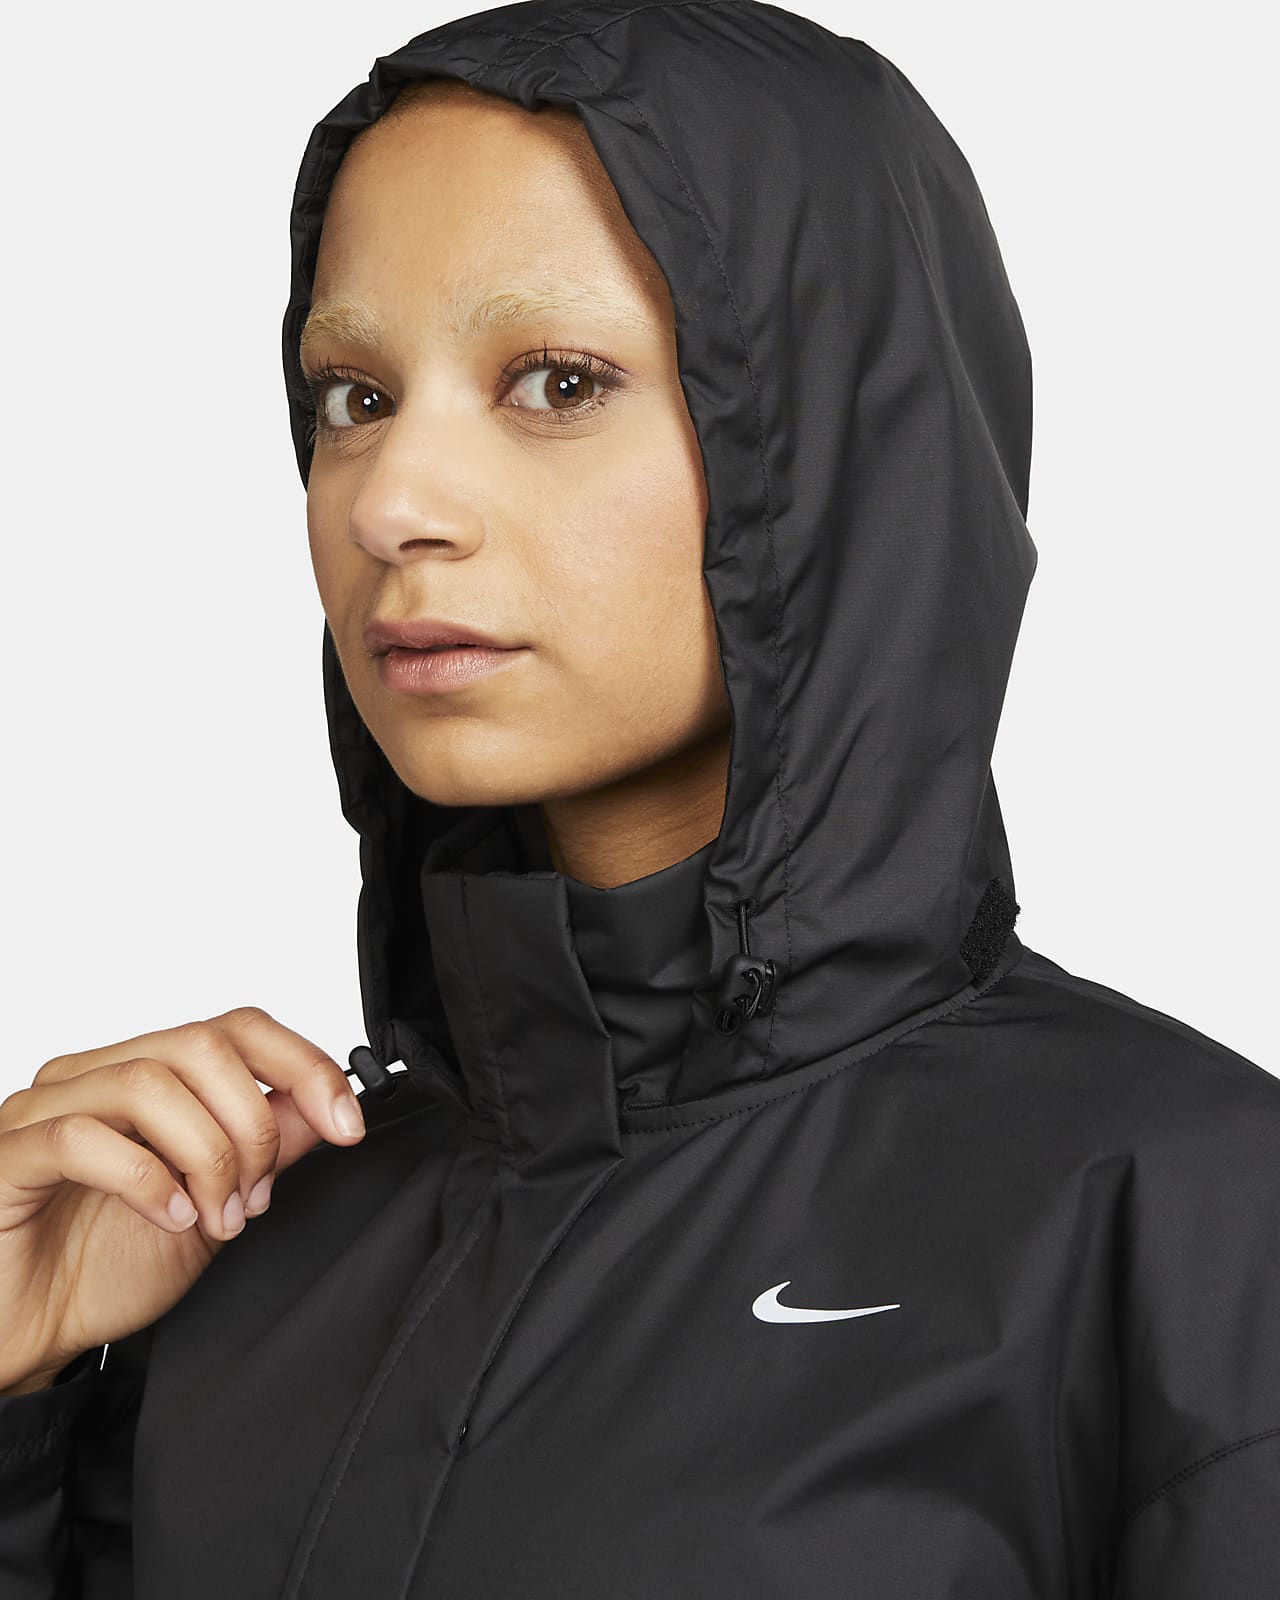 Fast Running Nike Women\'s Jacket. Repel